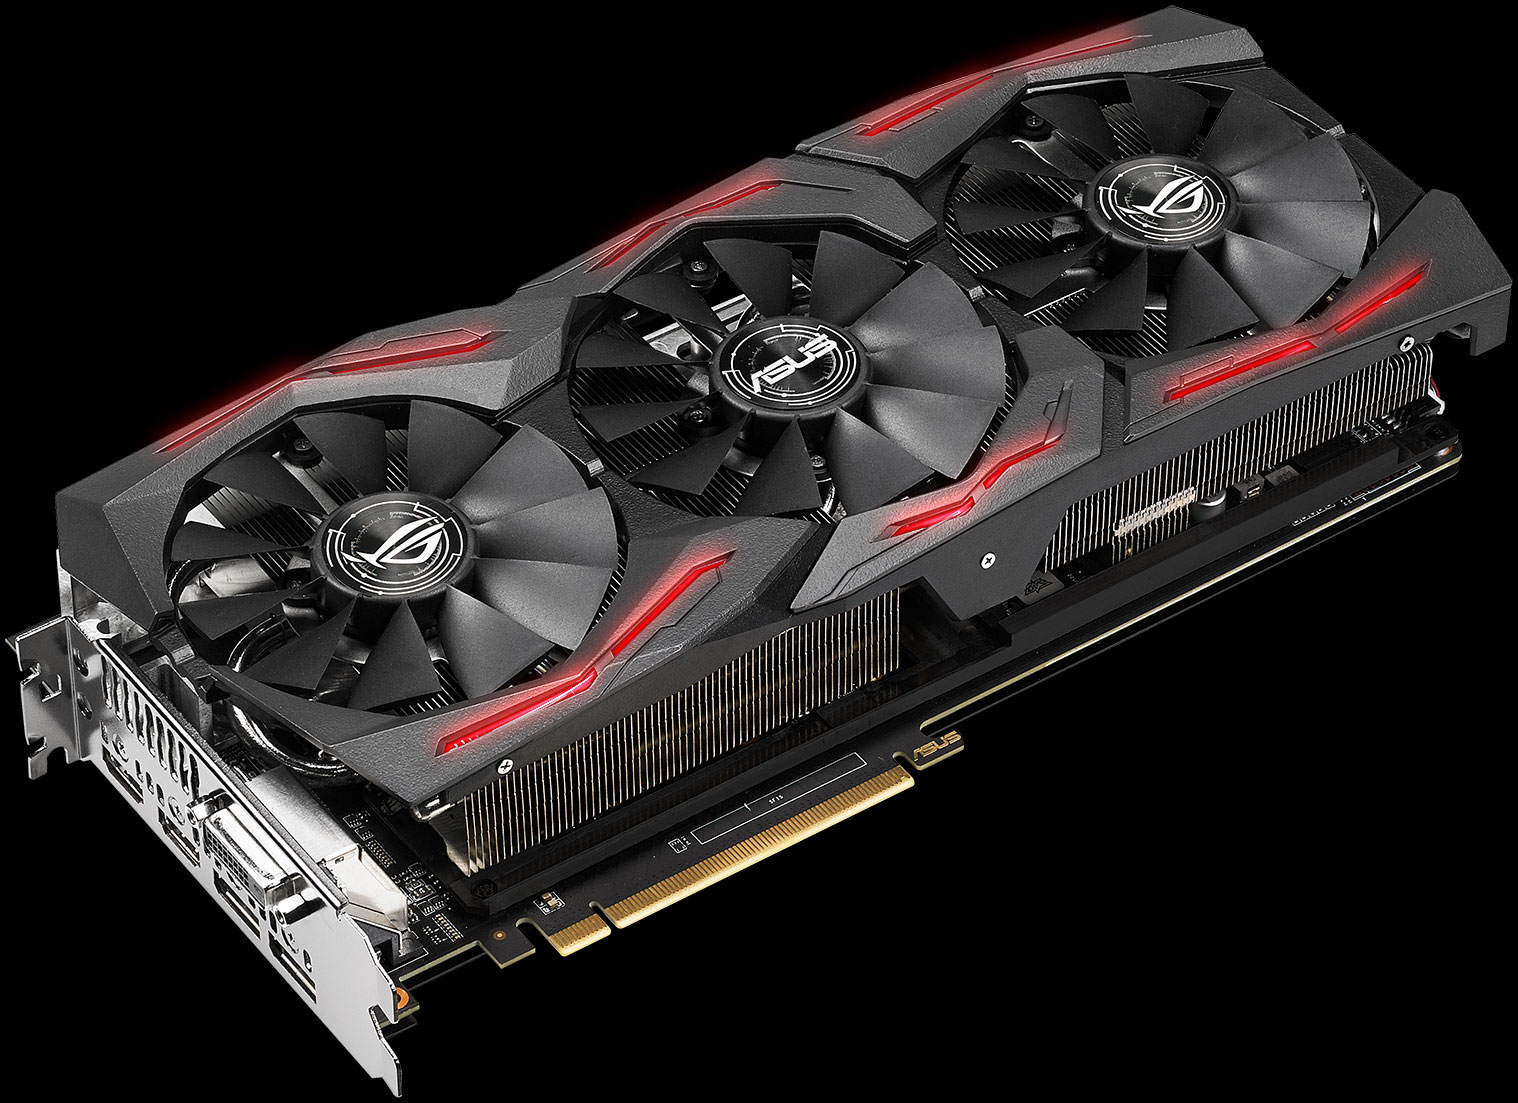 AMD's Radeon RX Vega gets the ROG Strix treatment